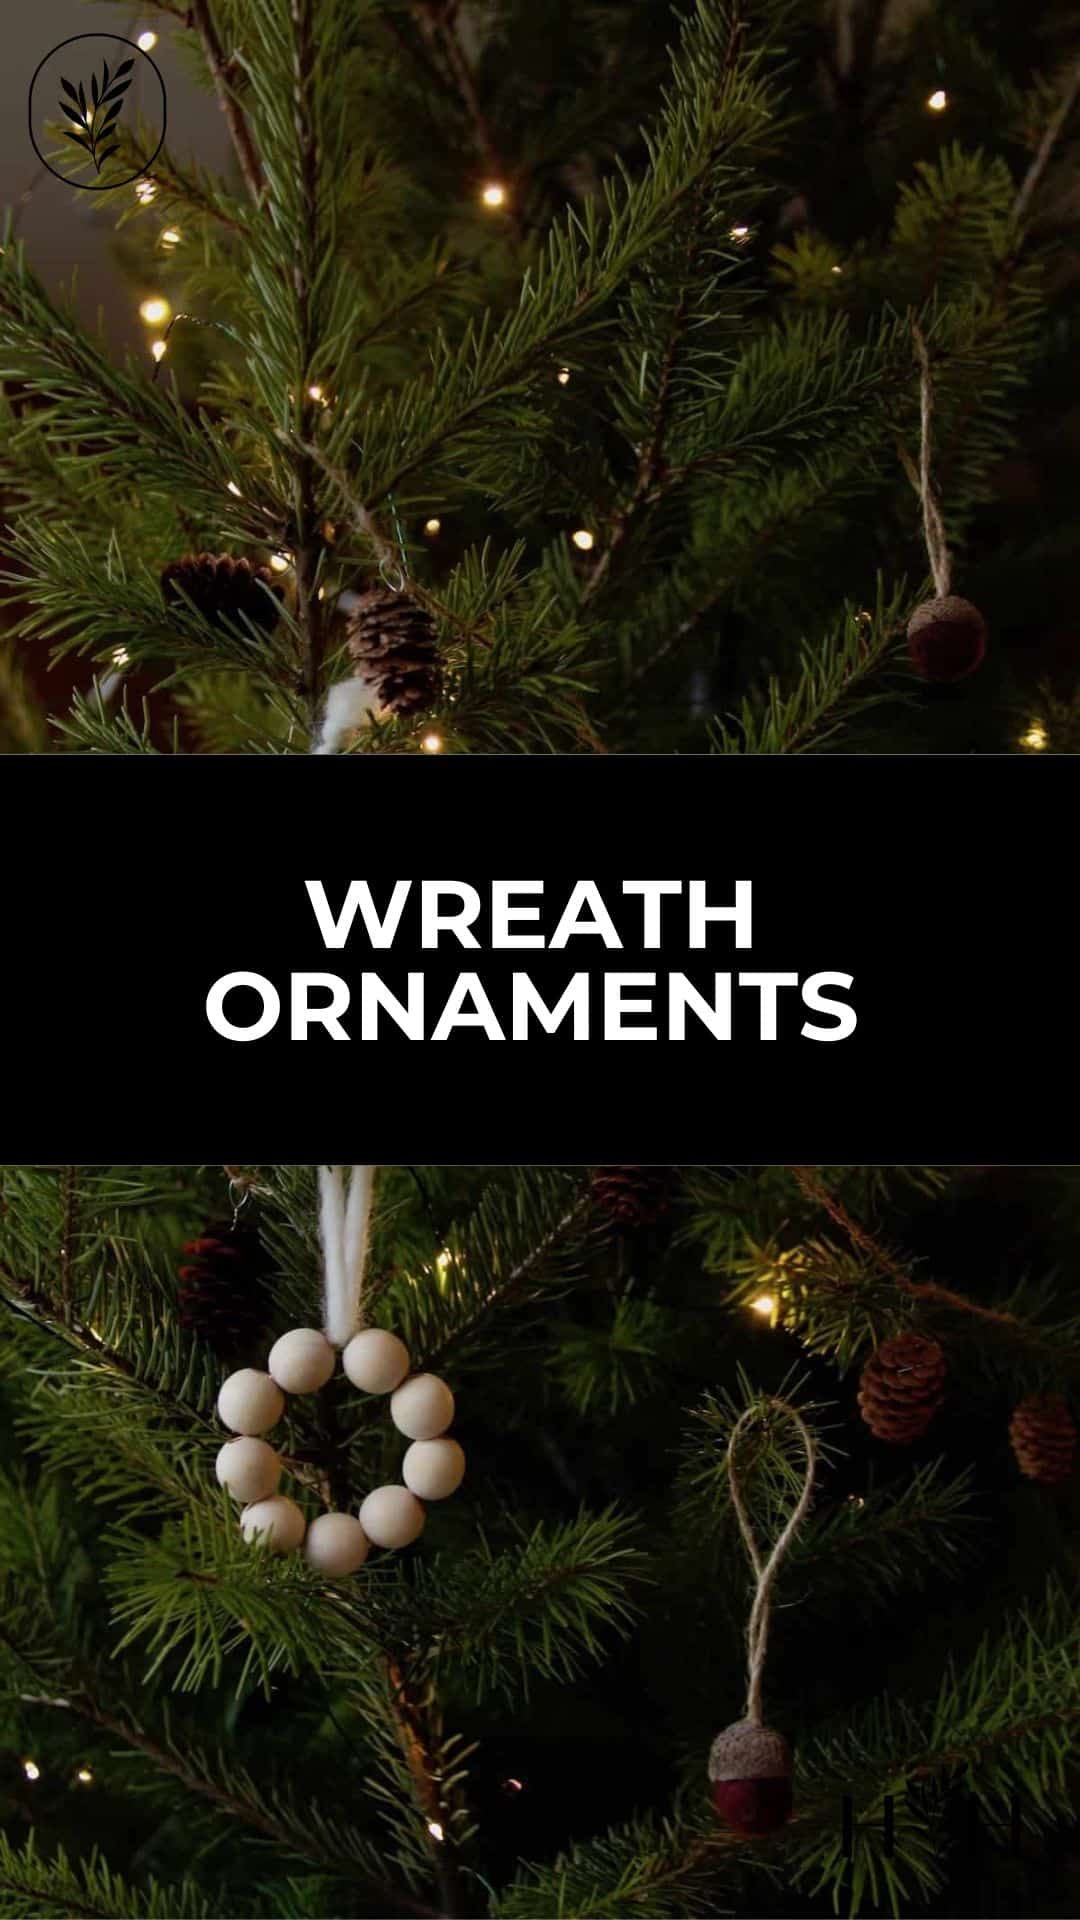 Wreath ornaments via @home4theharvest